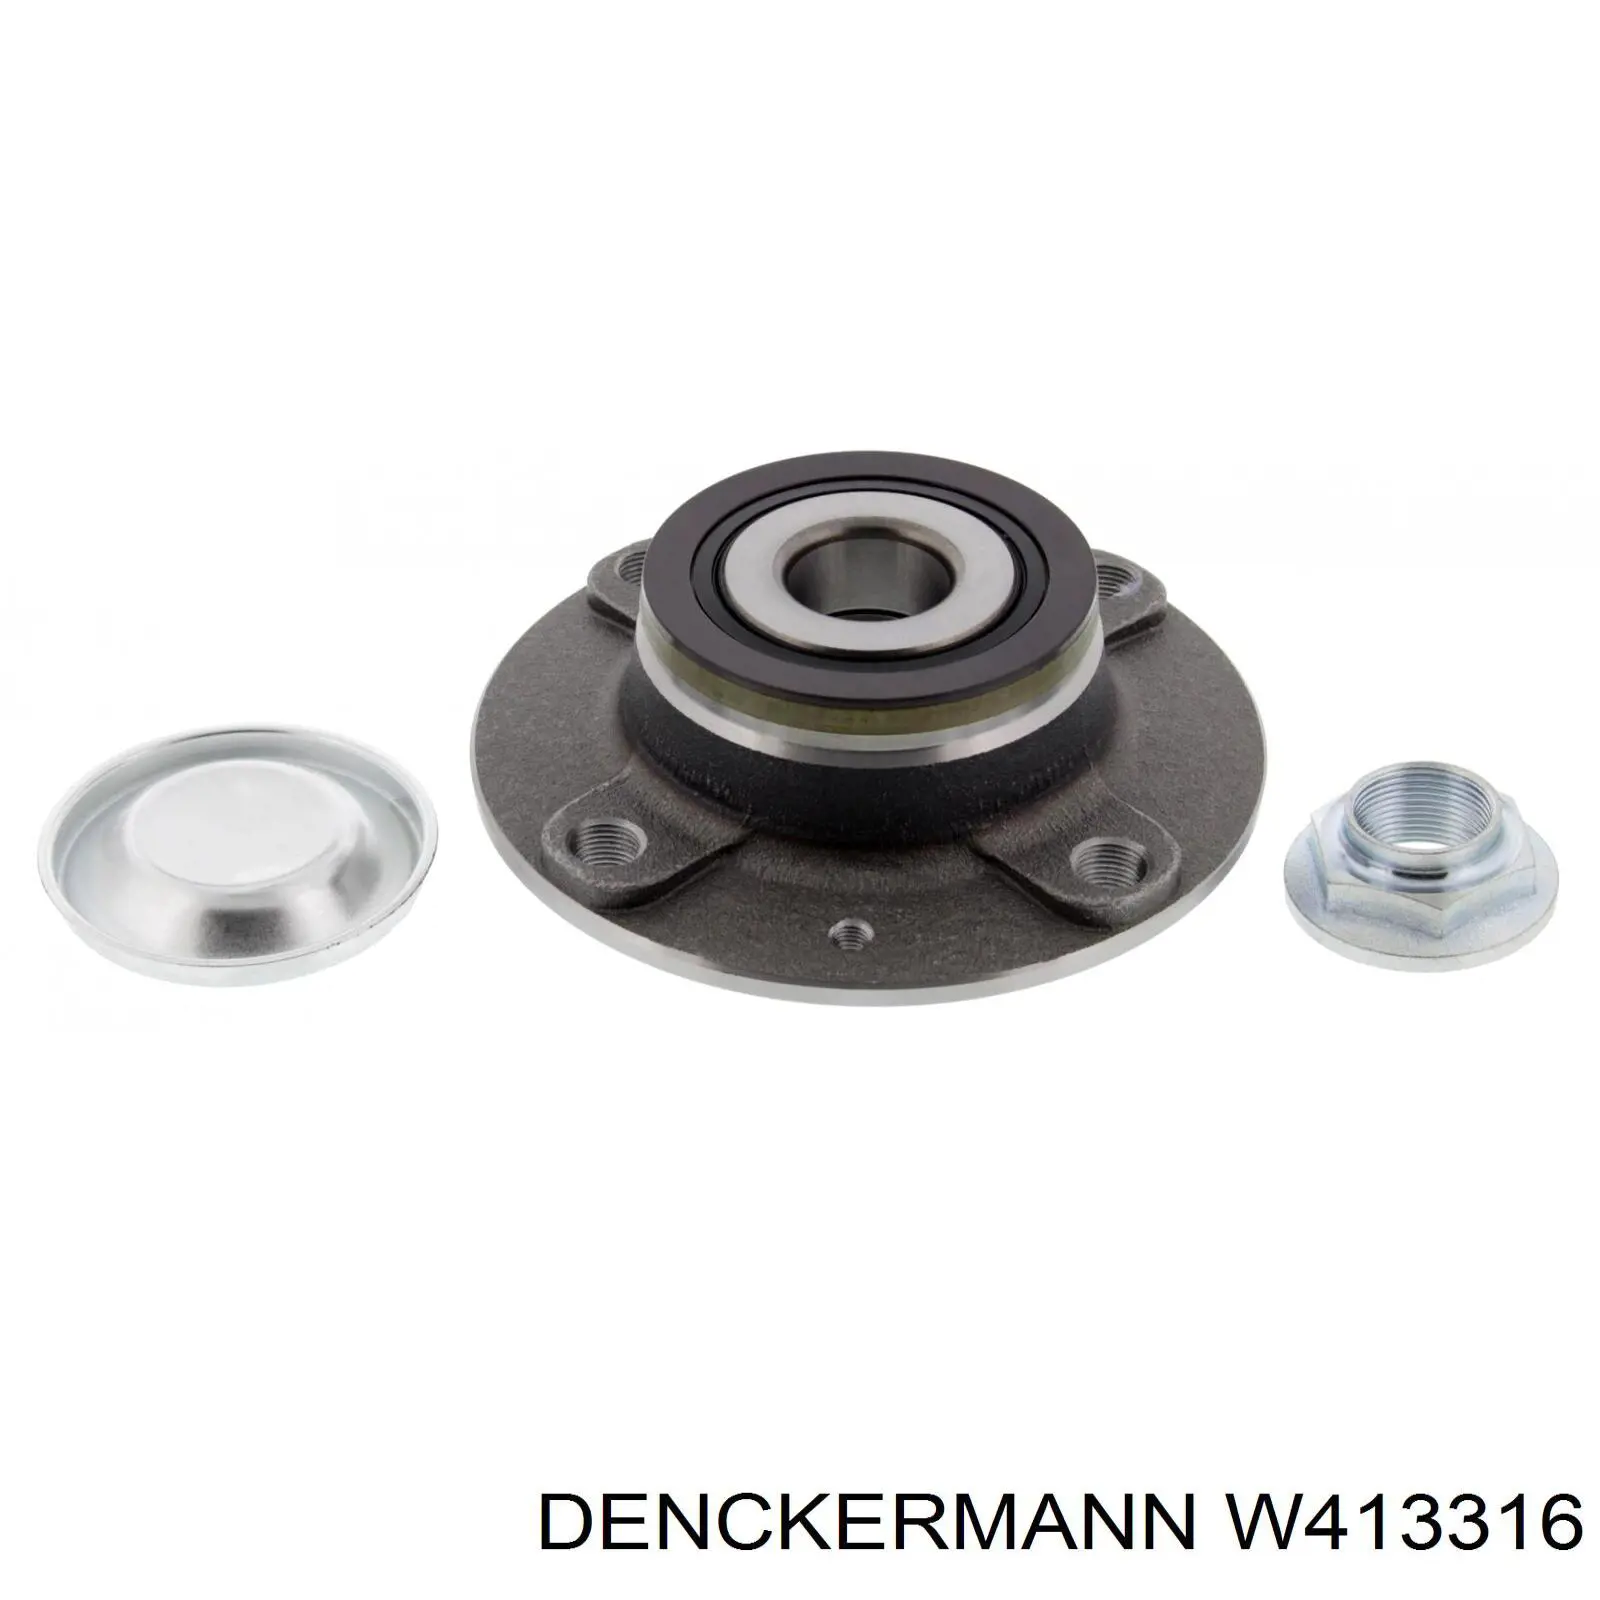 W413316 Denckermann ступица задняя